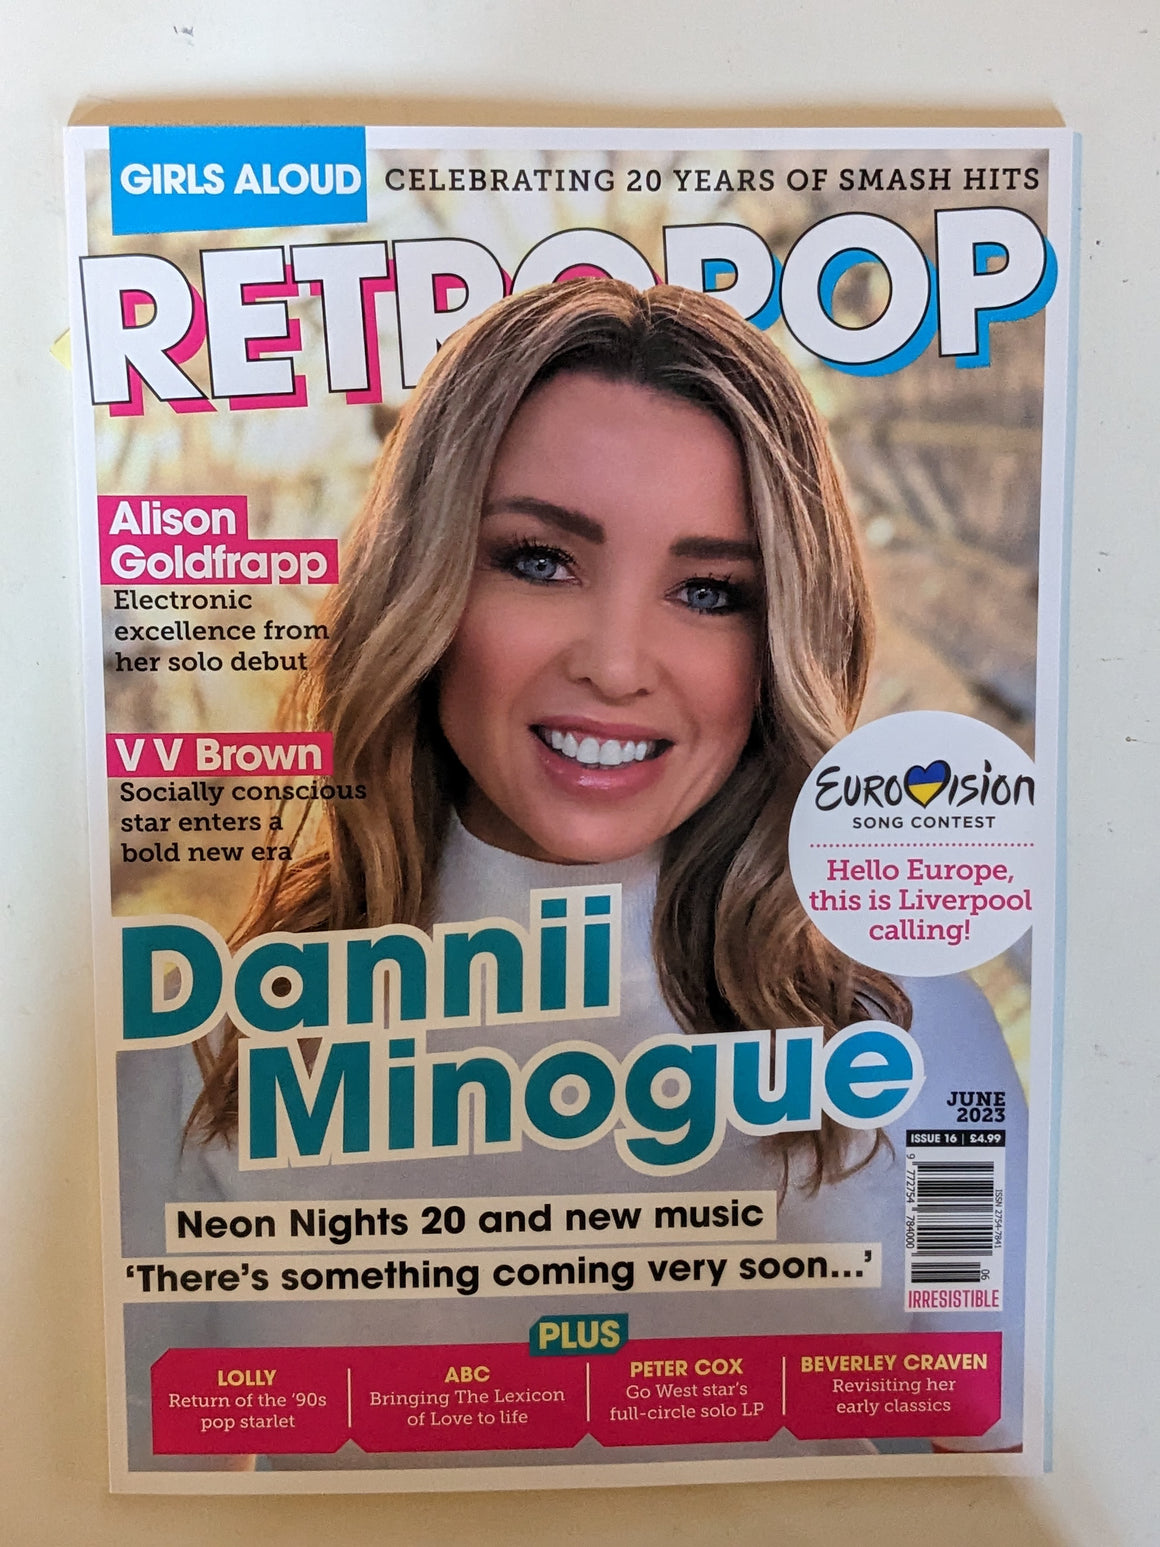 RETRO POP Magazine June 2023 DANNII MINOGUE GIrls Aloud Here At Last